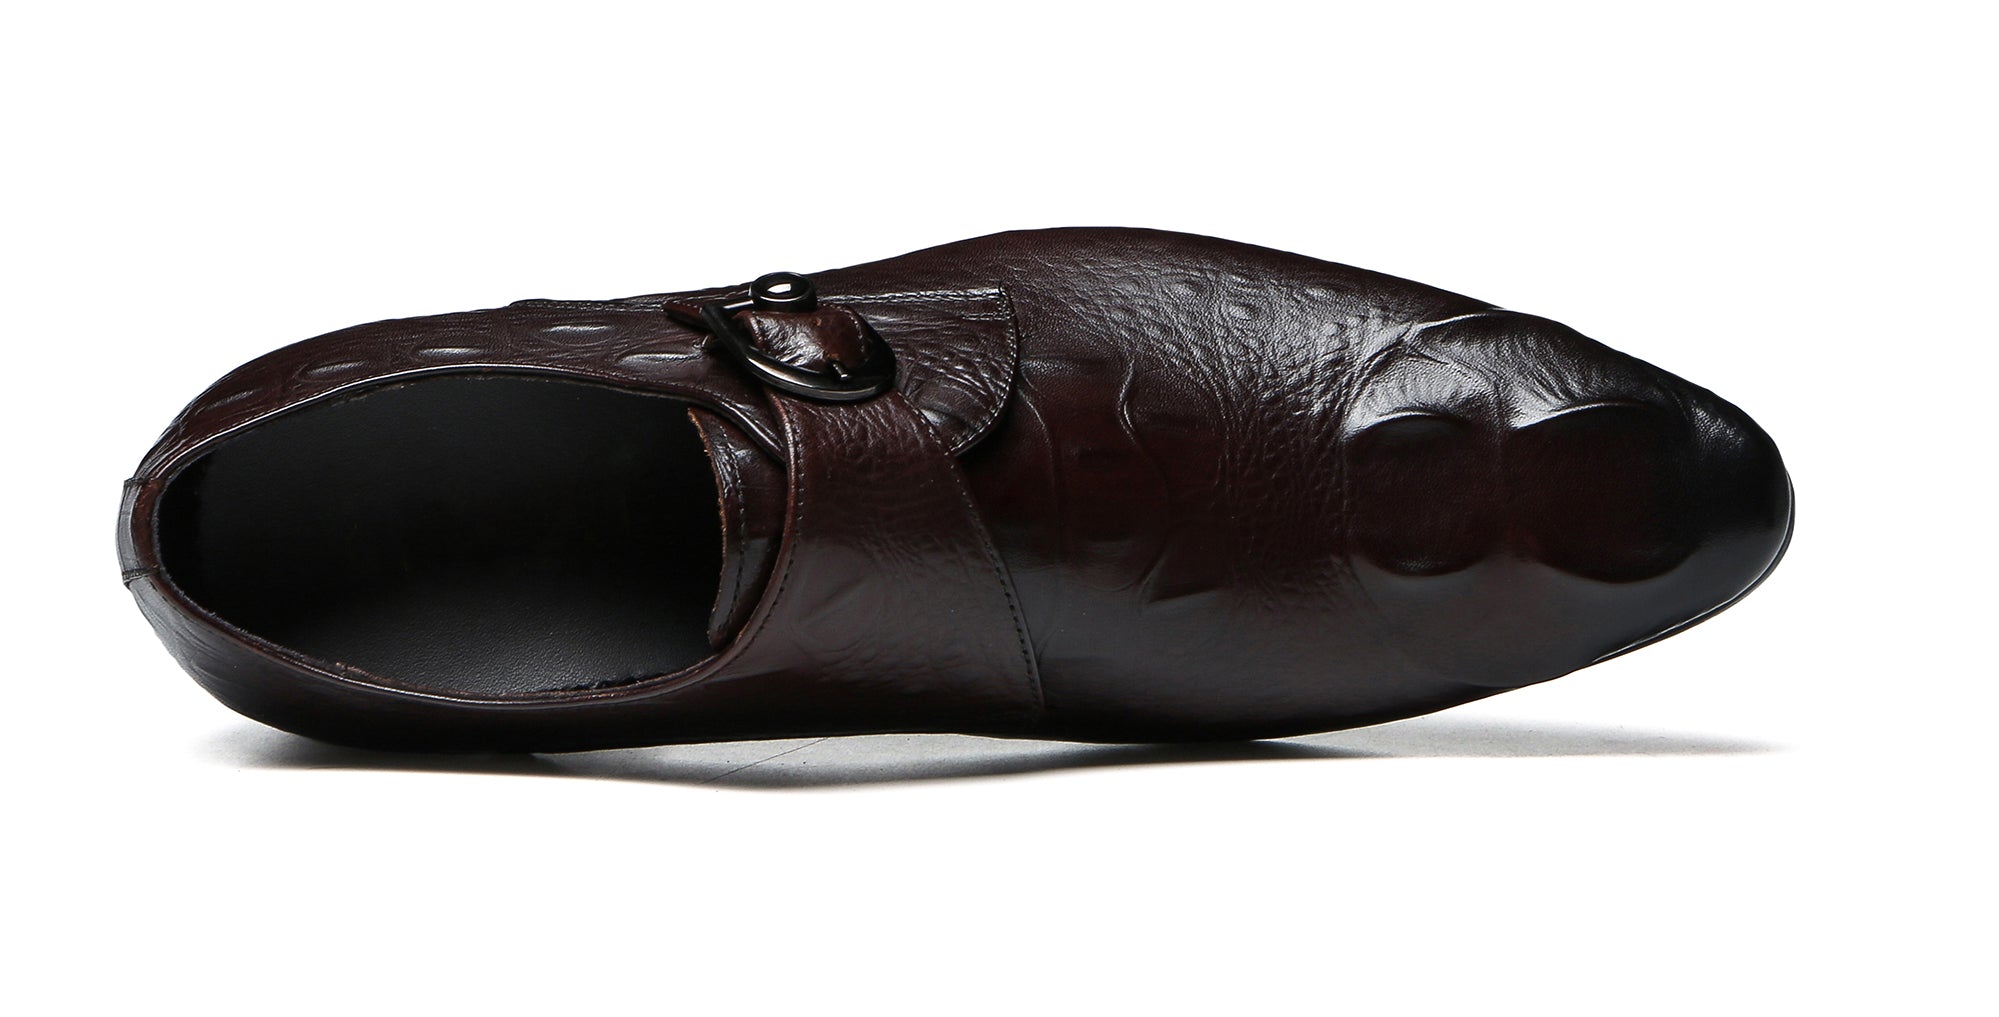 Men's Alligator Buckle Leather Loafers